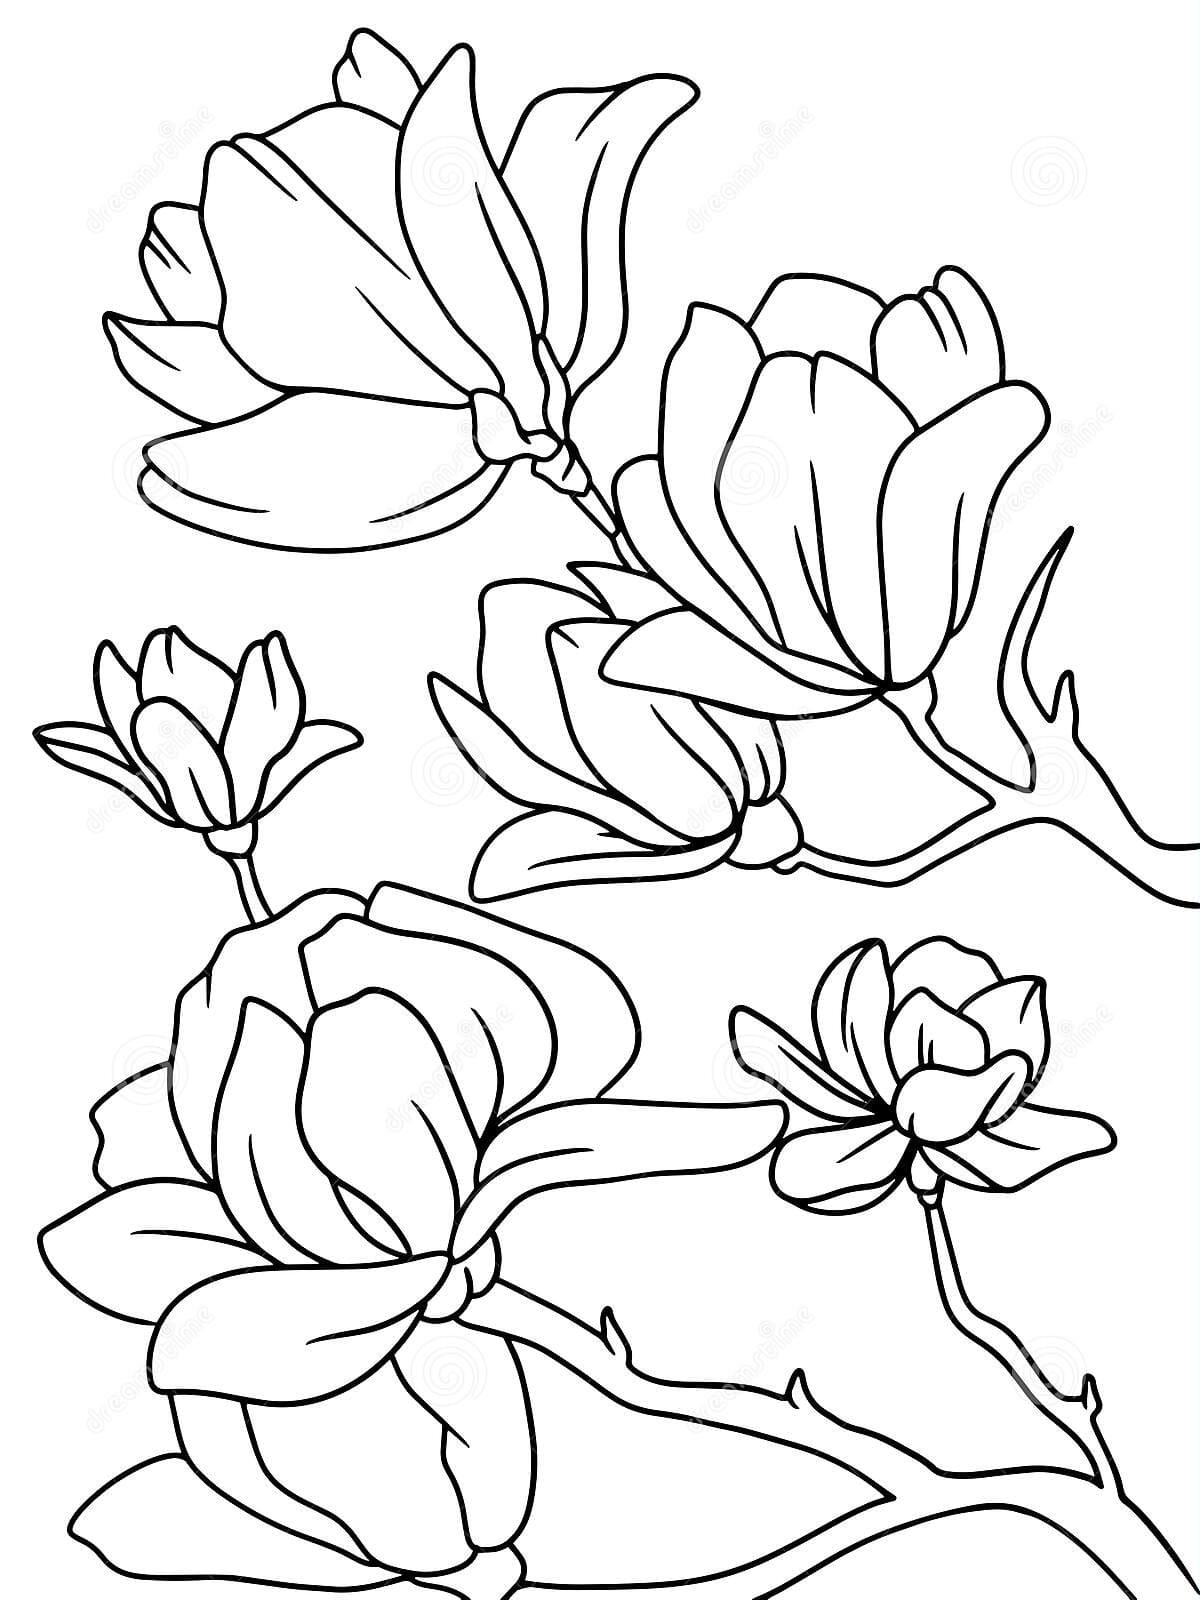 Coloring Magnolia Flower Image Free